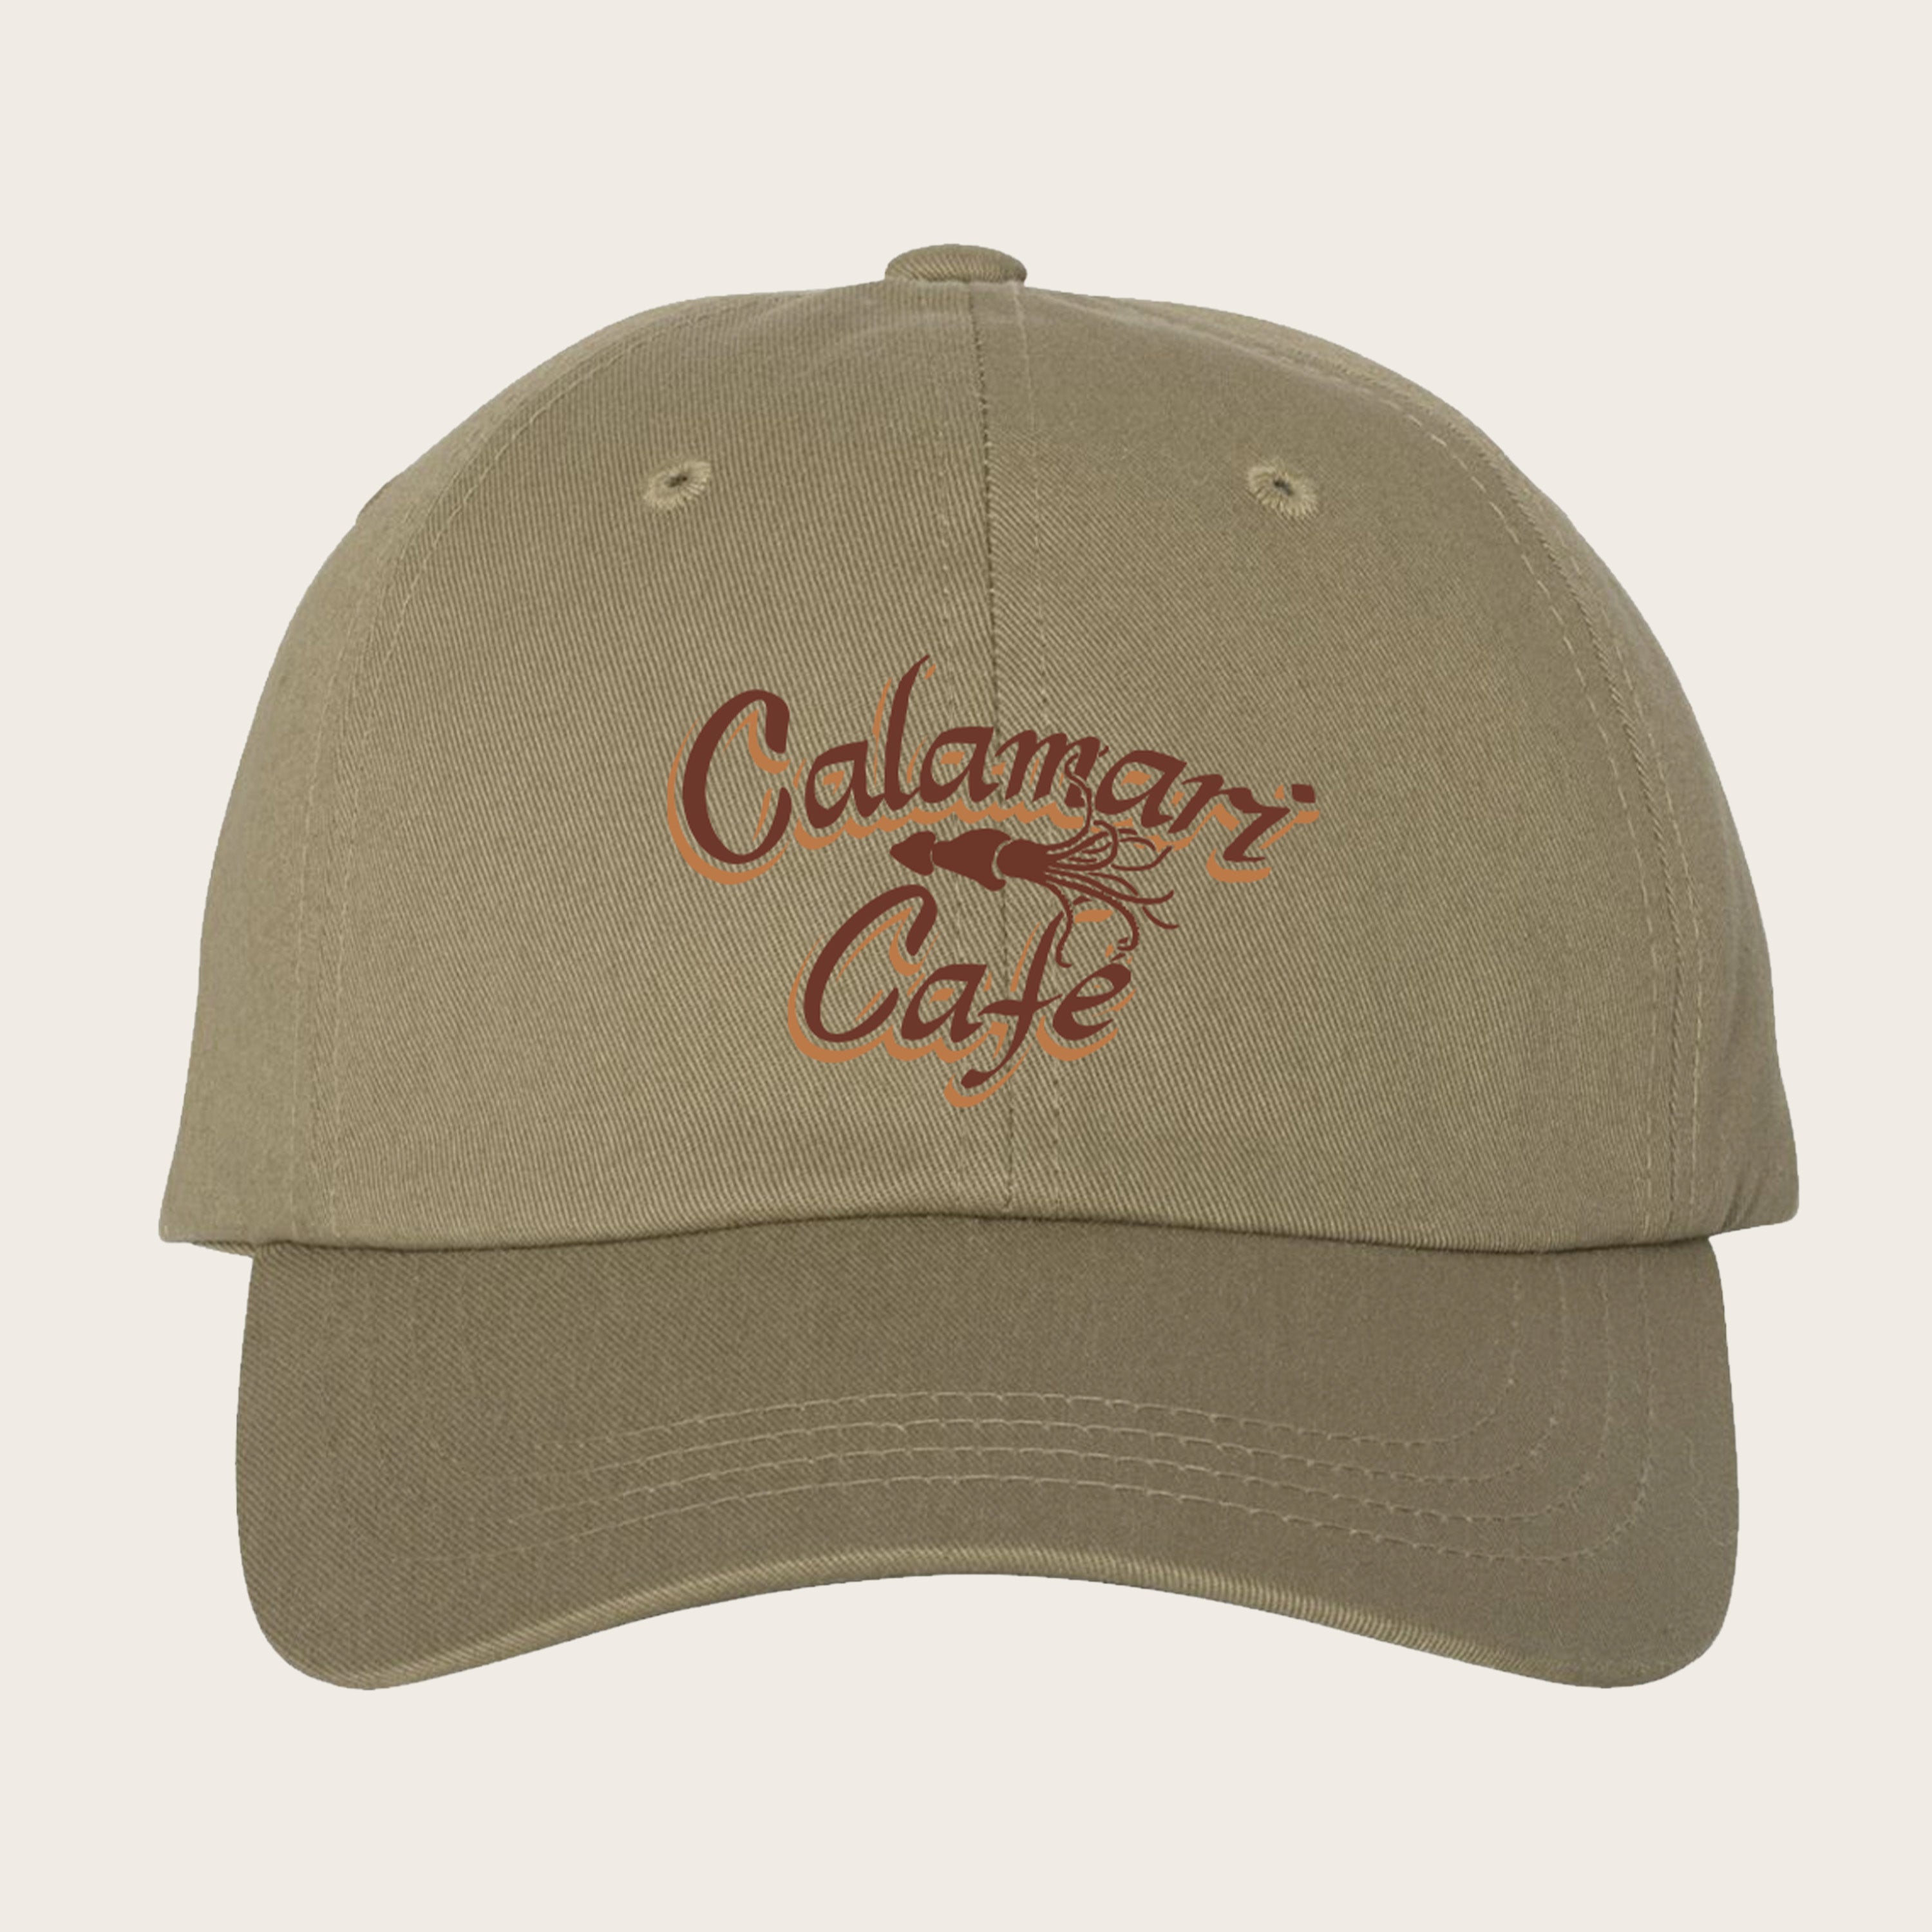 Calamari Cafe Hat